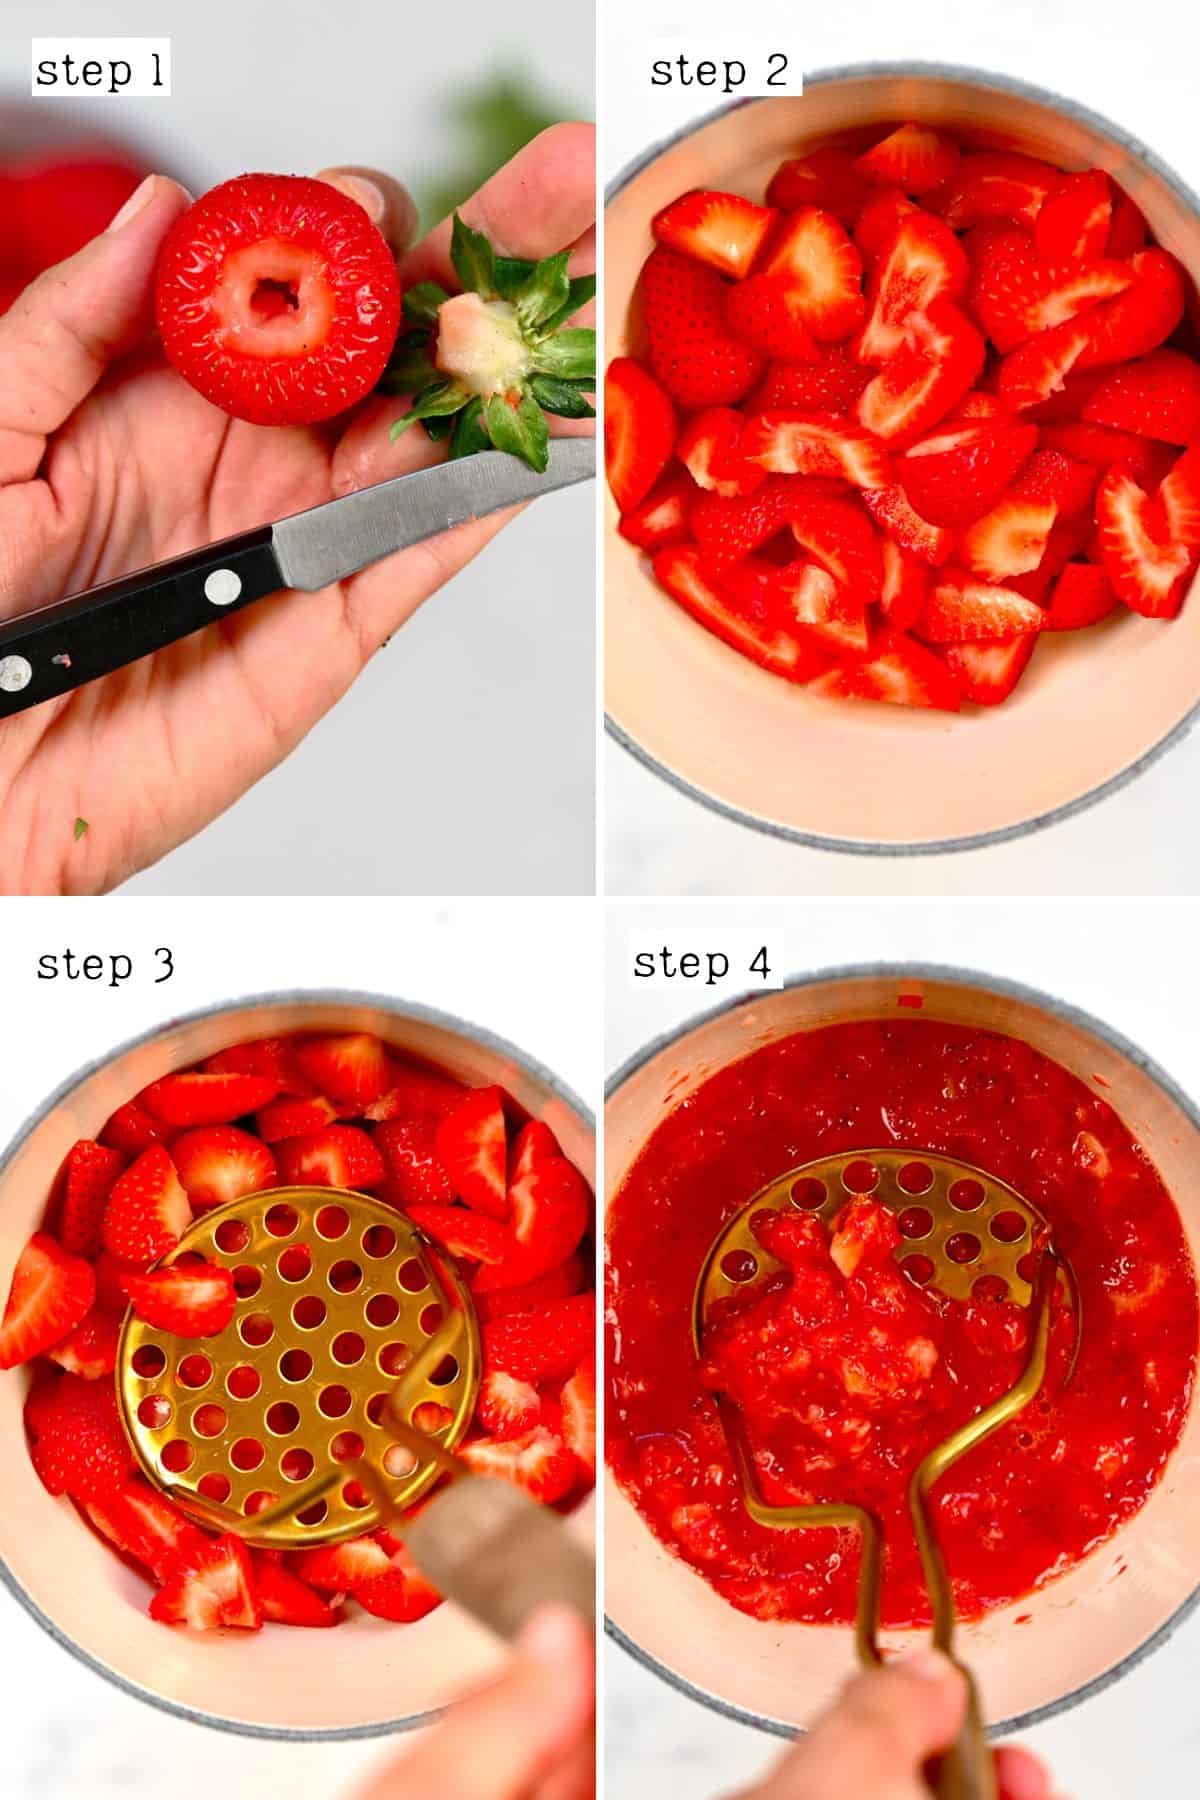 Steps for mashing strawberries